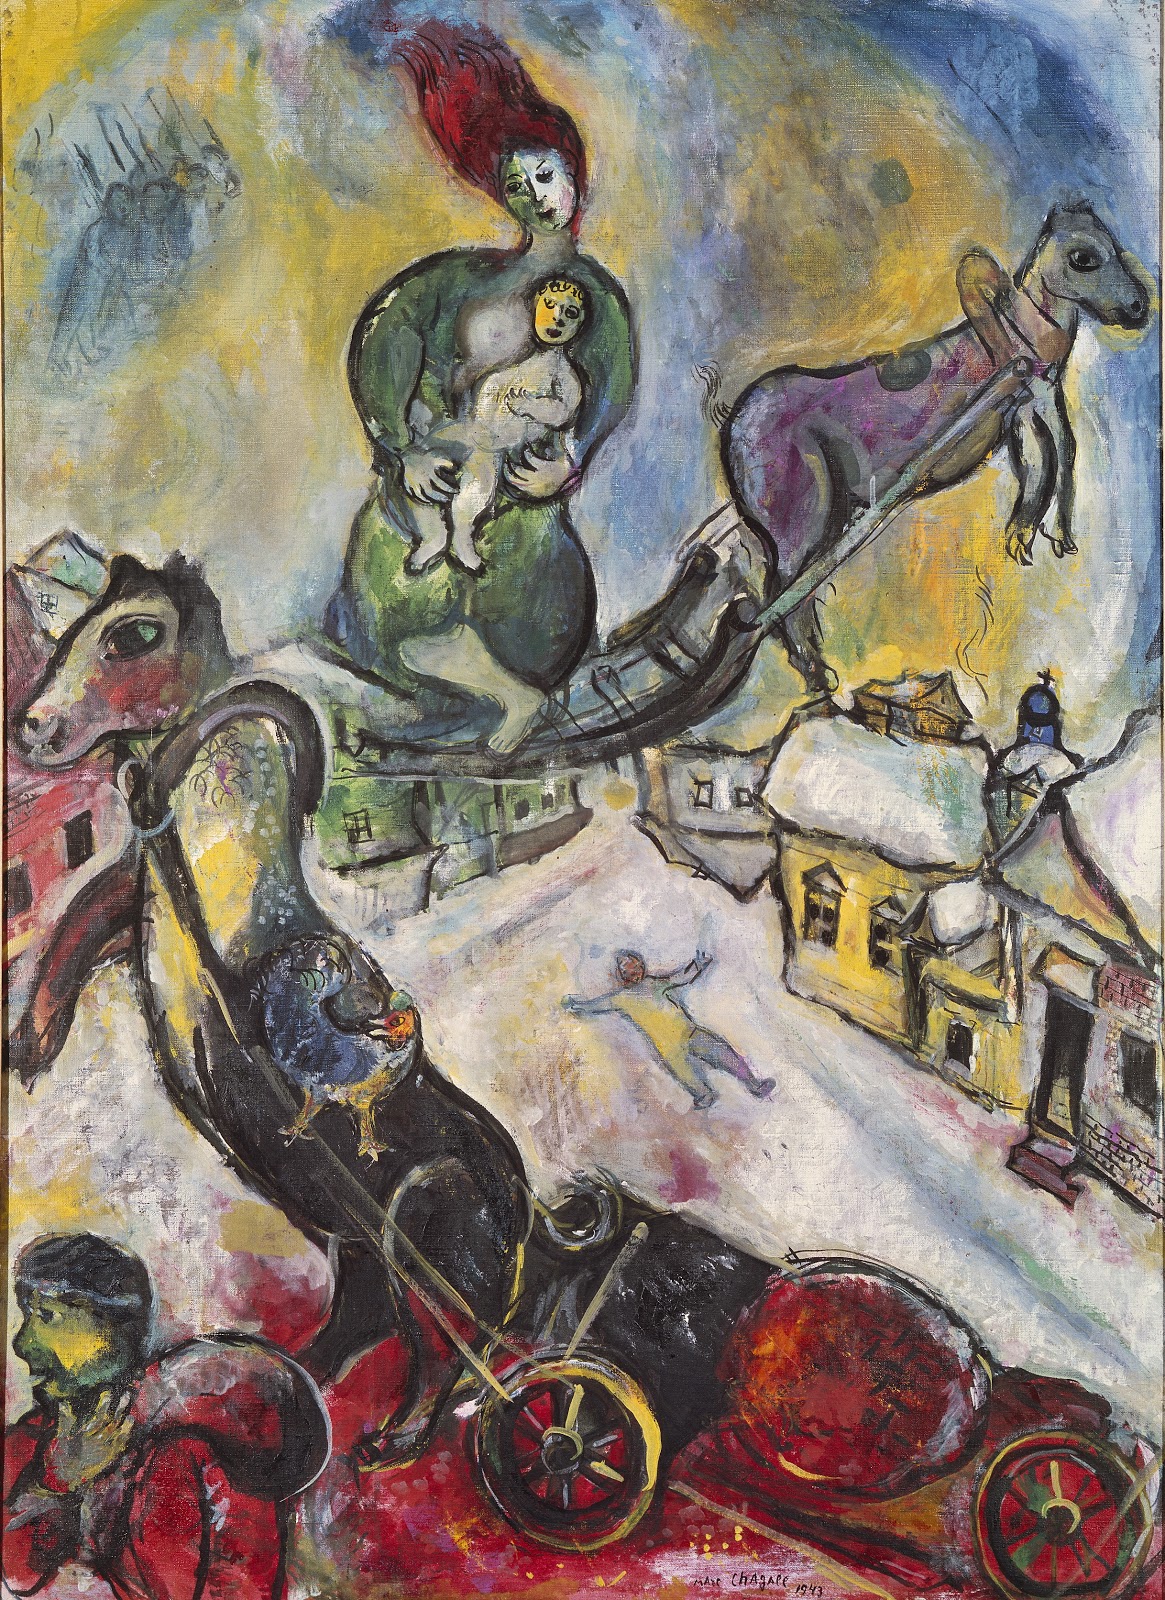 Marc+Chagall-1887-1985 (314).jpg